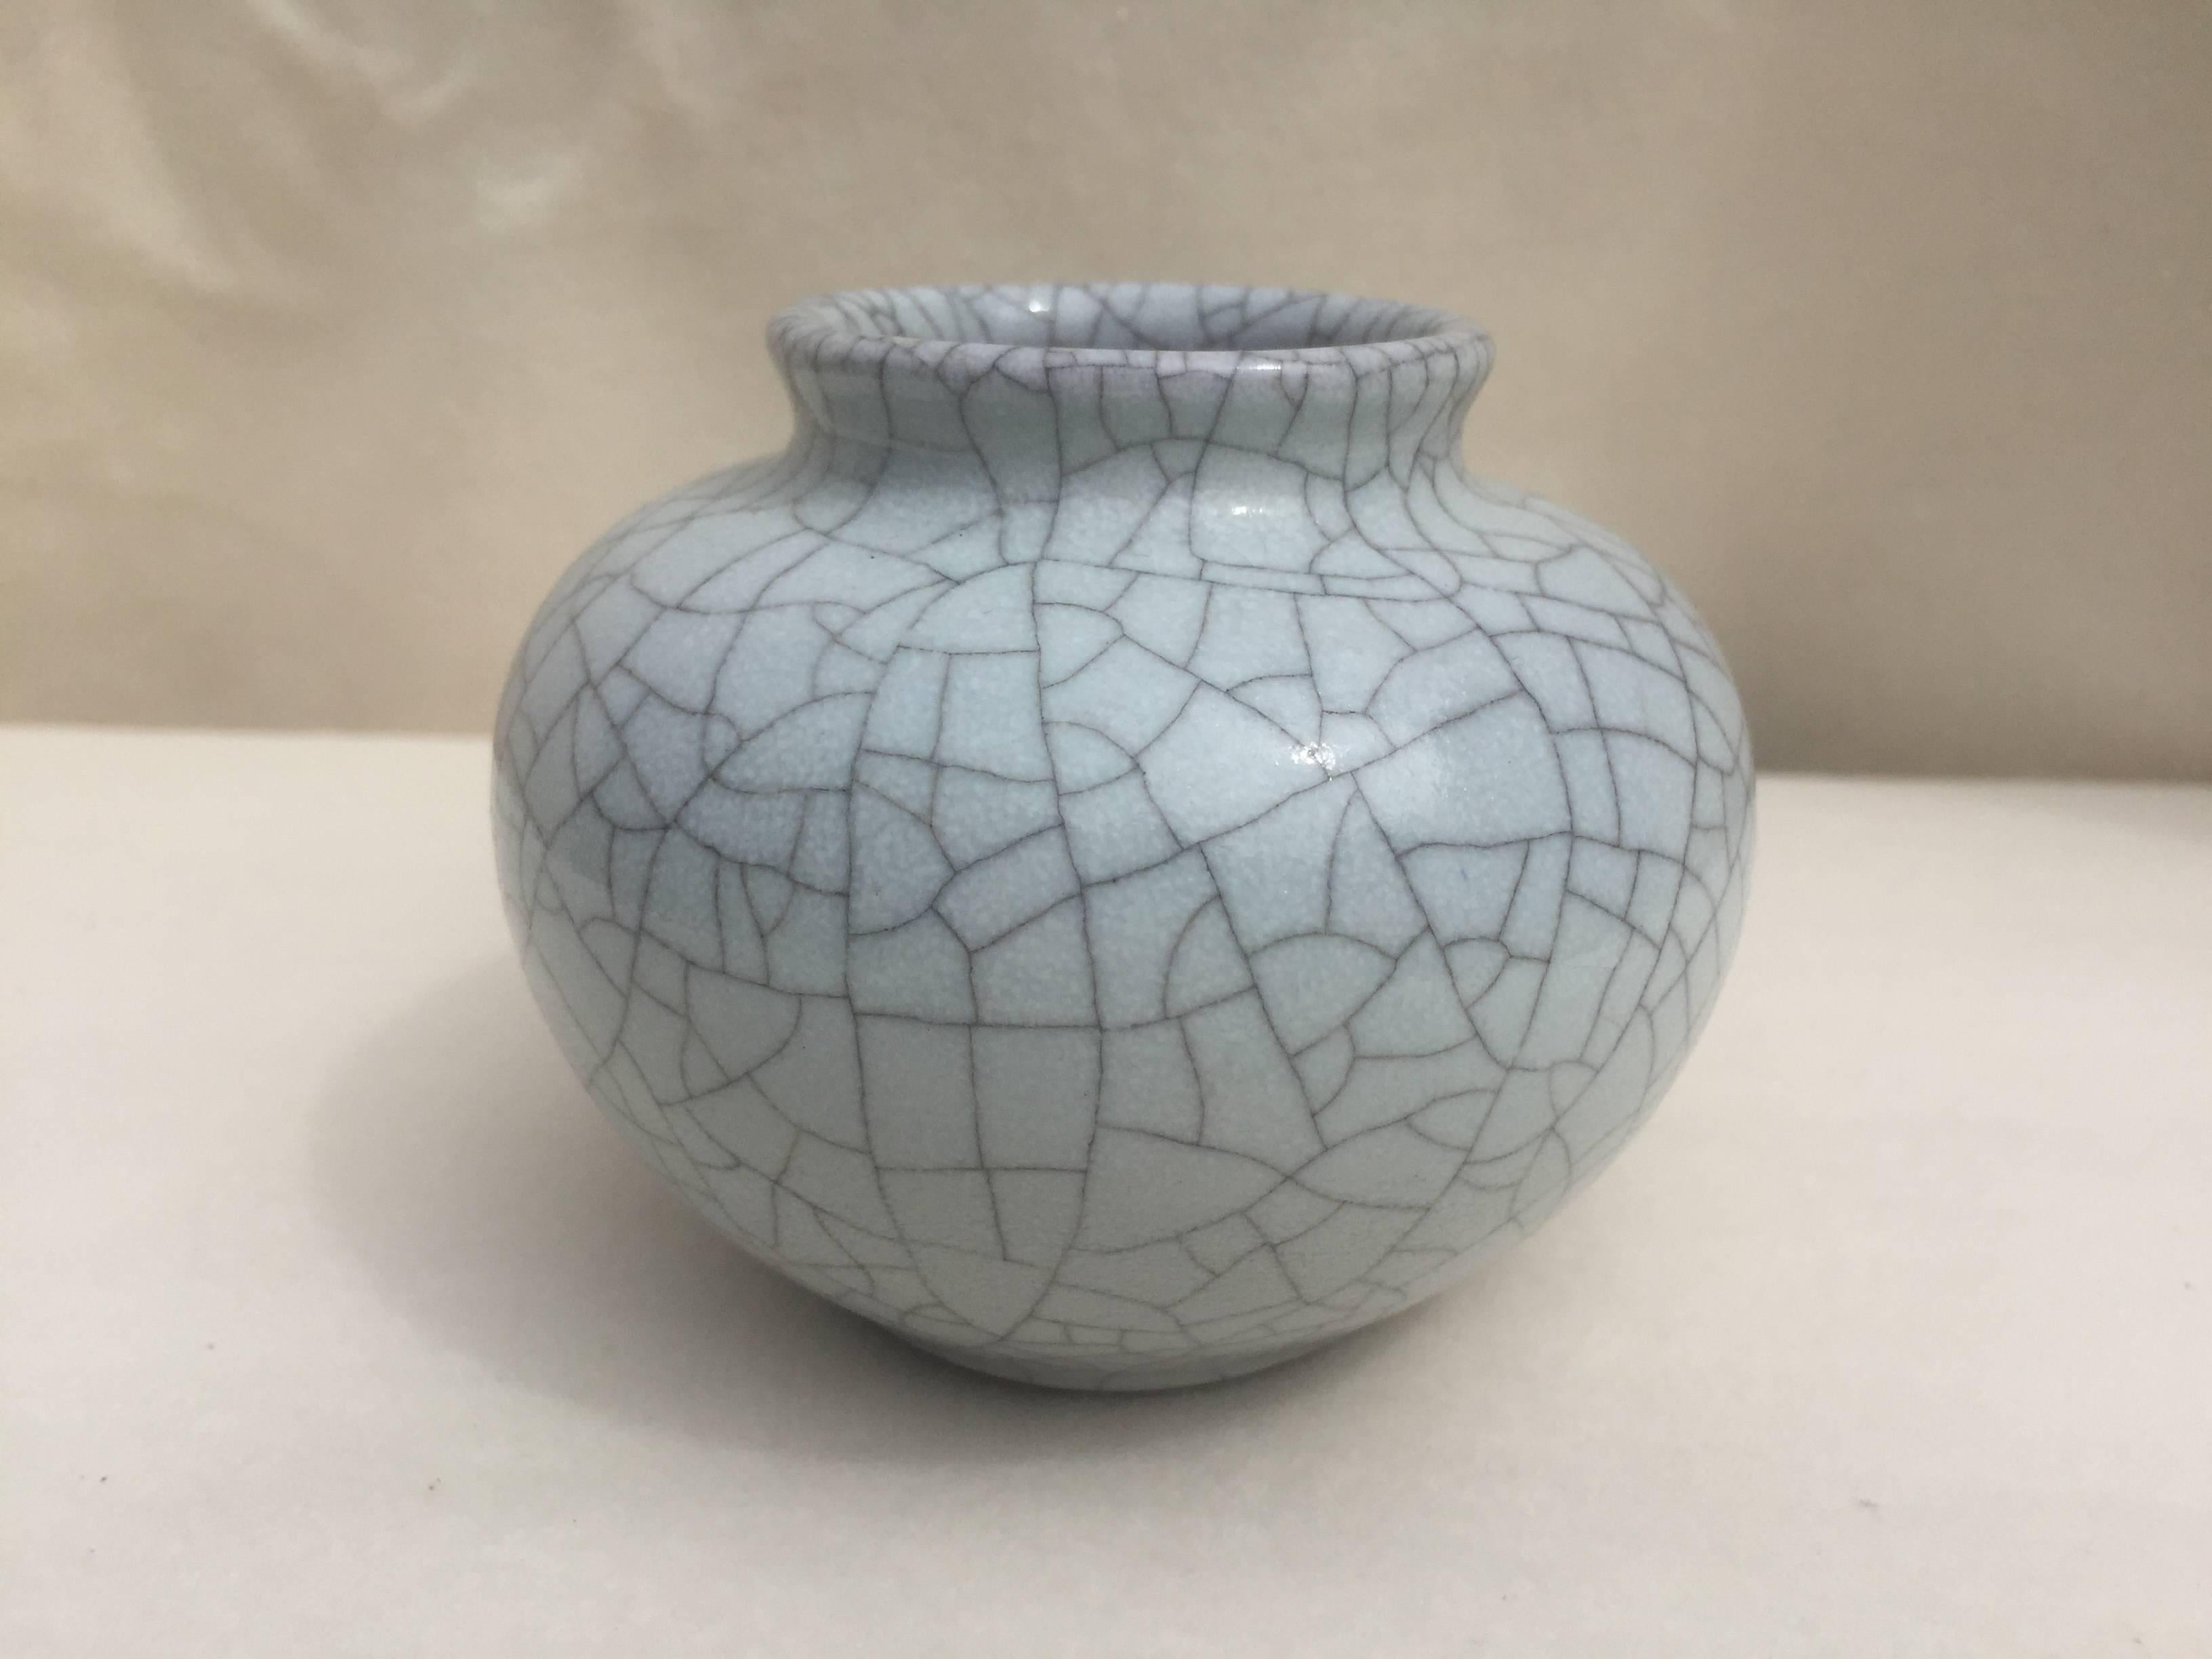 Spherical vase attributed to Fridegart Glatzle.
Marked Karlsruhe Majolica serial number 9578, 1970s.
Has the grey crackled glaze in the classical Japanese manner, 